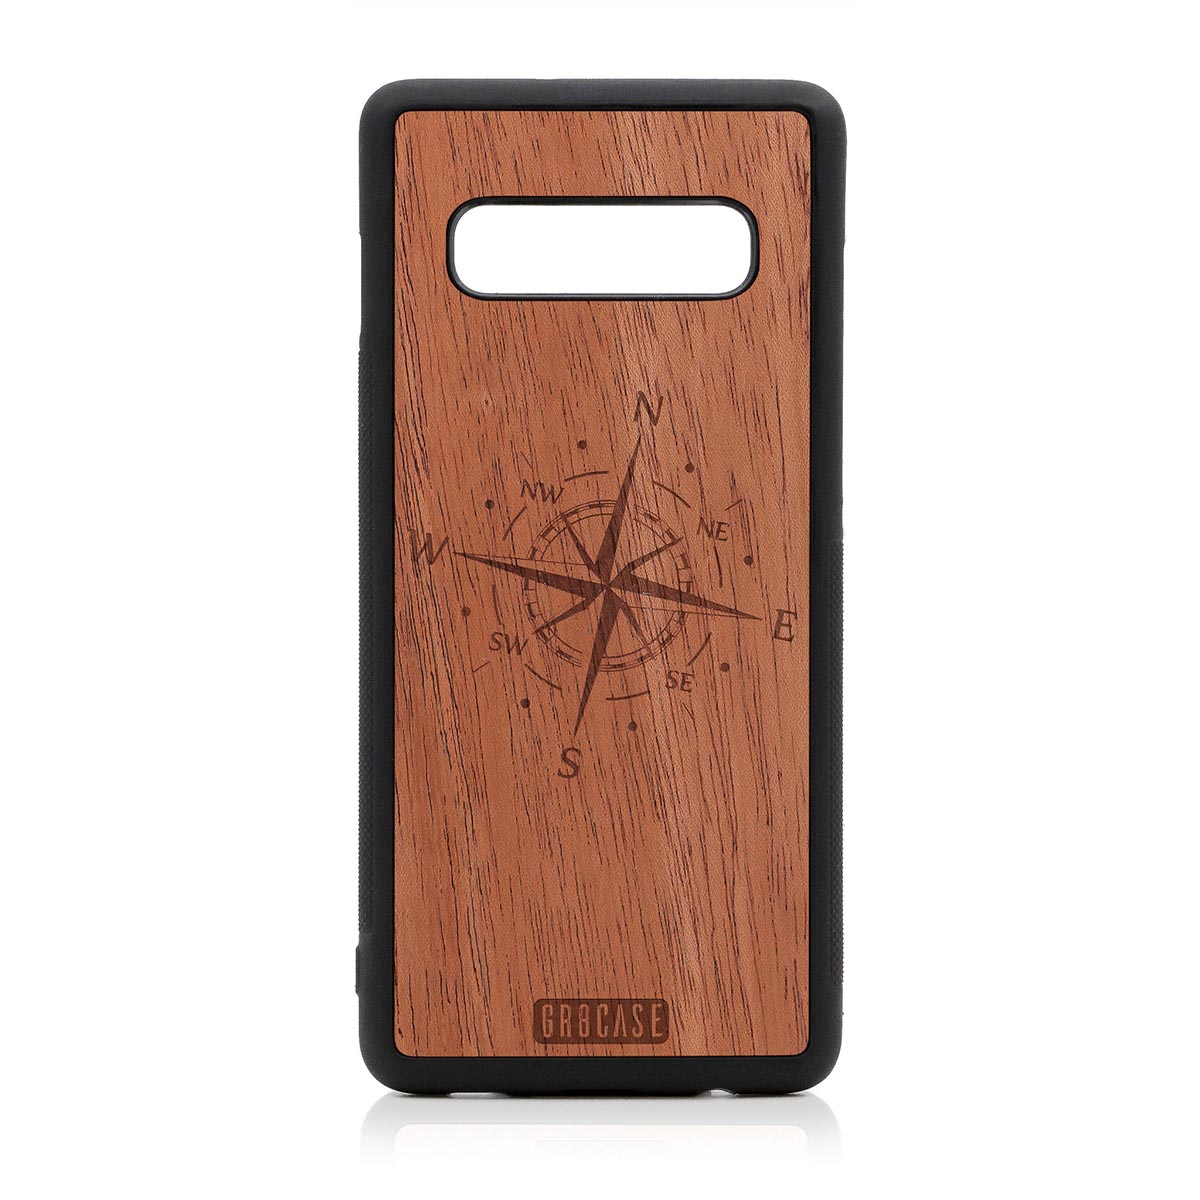 Compass Design Wood Case Samsung Galaxy S10 Plus by GR8CASE